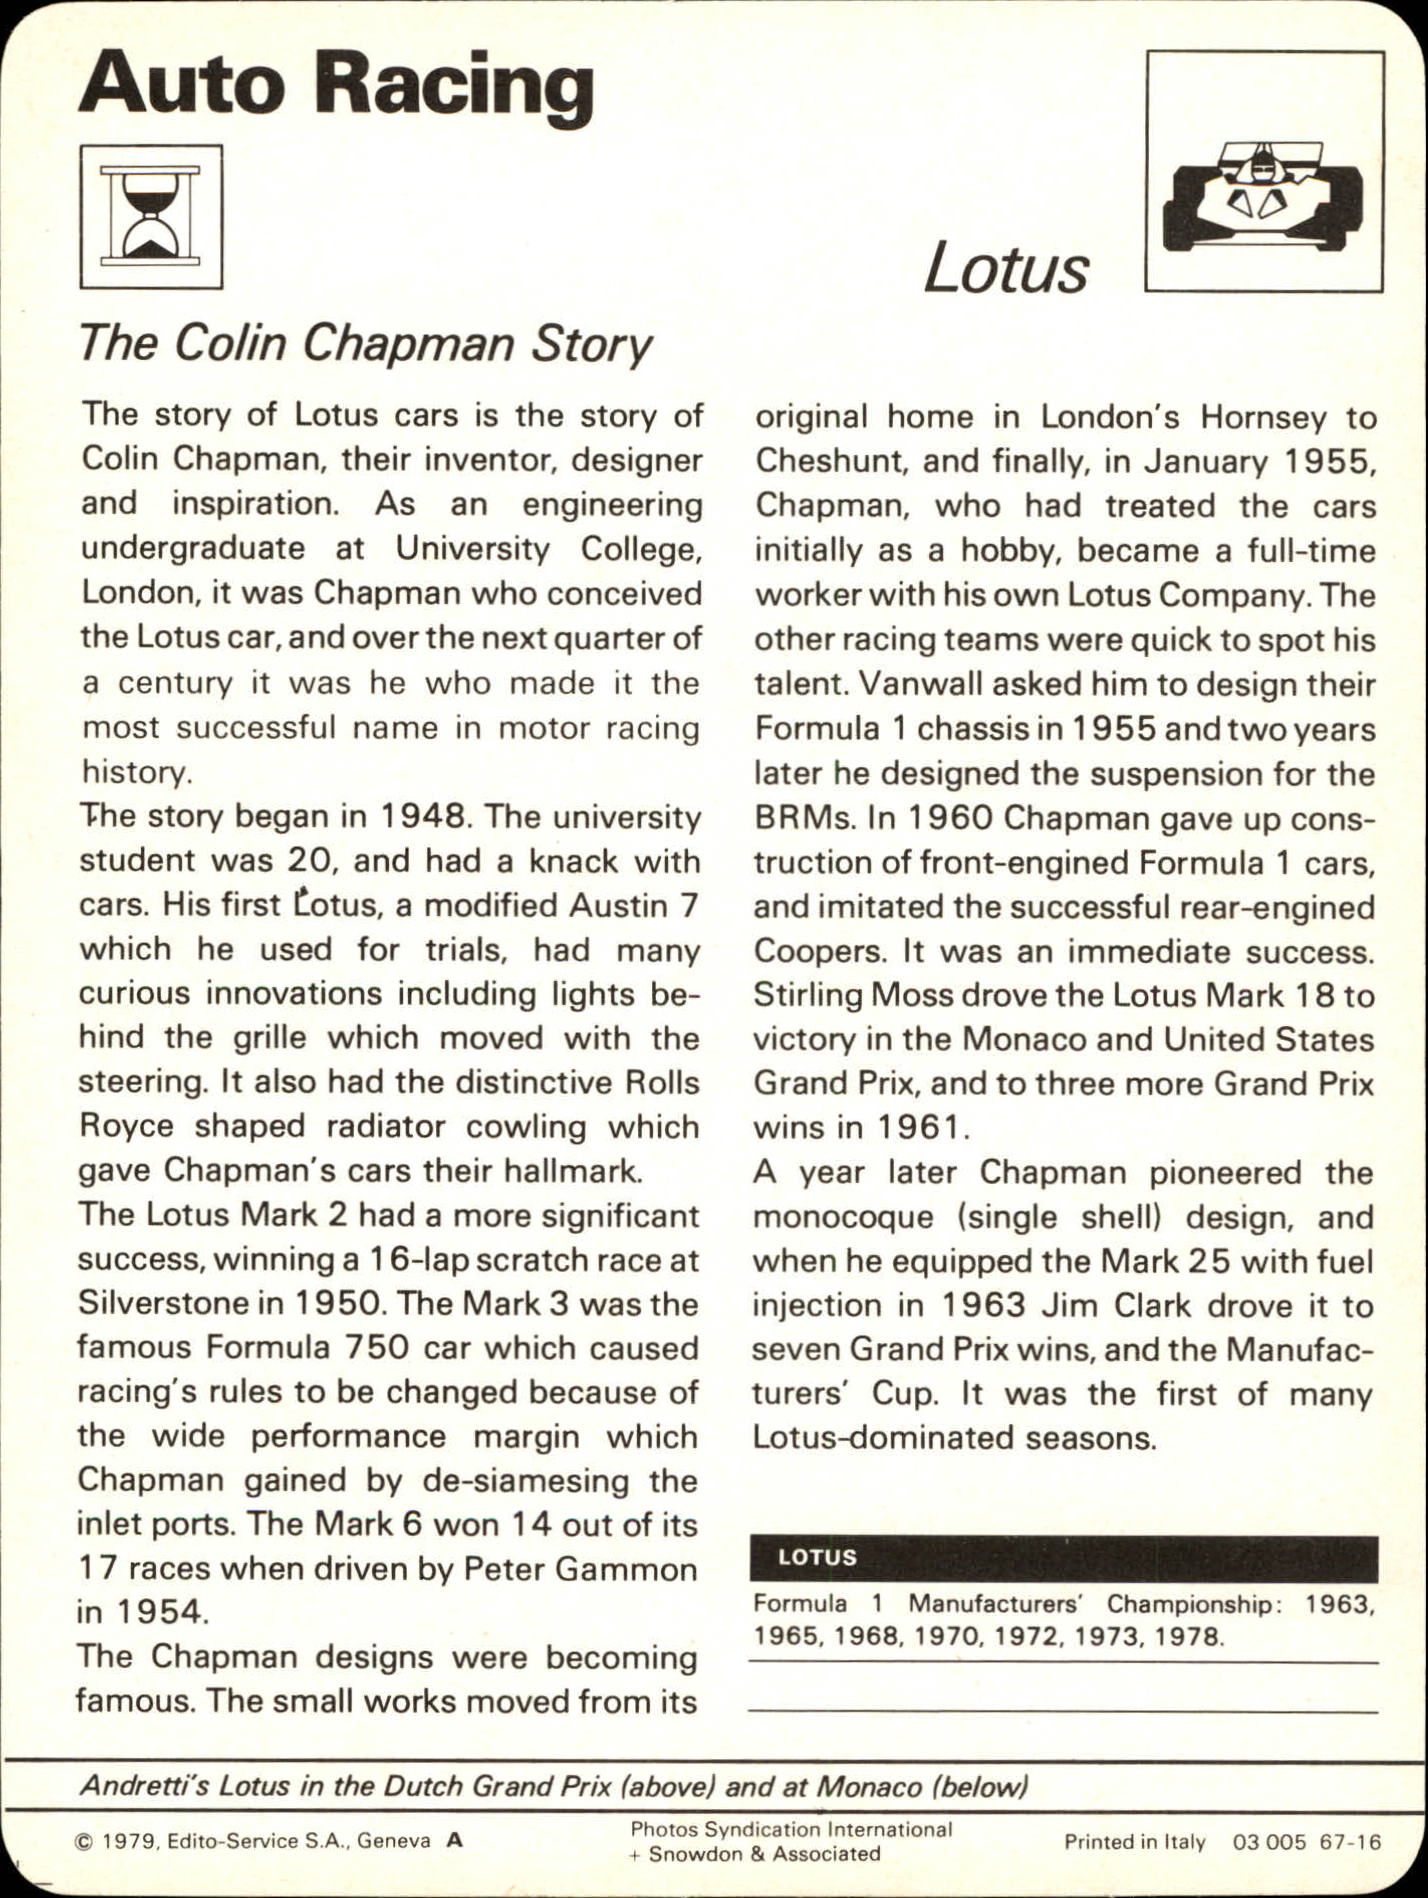 1977-79 Sportscaster Series 67 #6716 Lotus back image